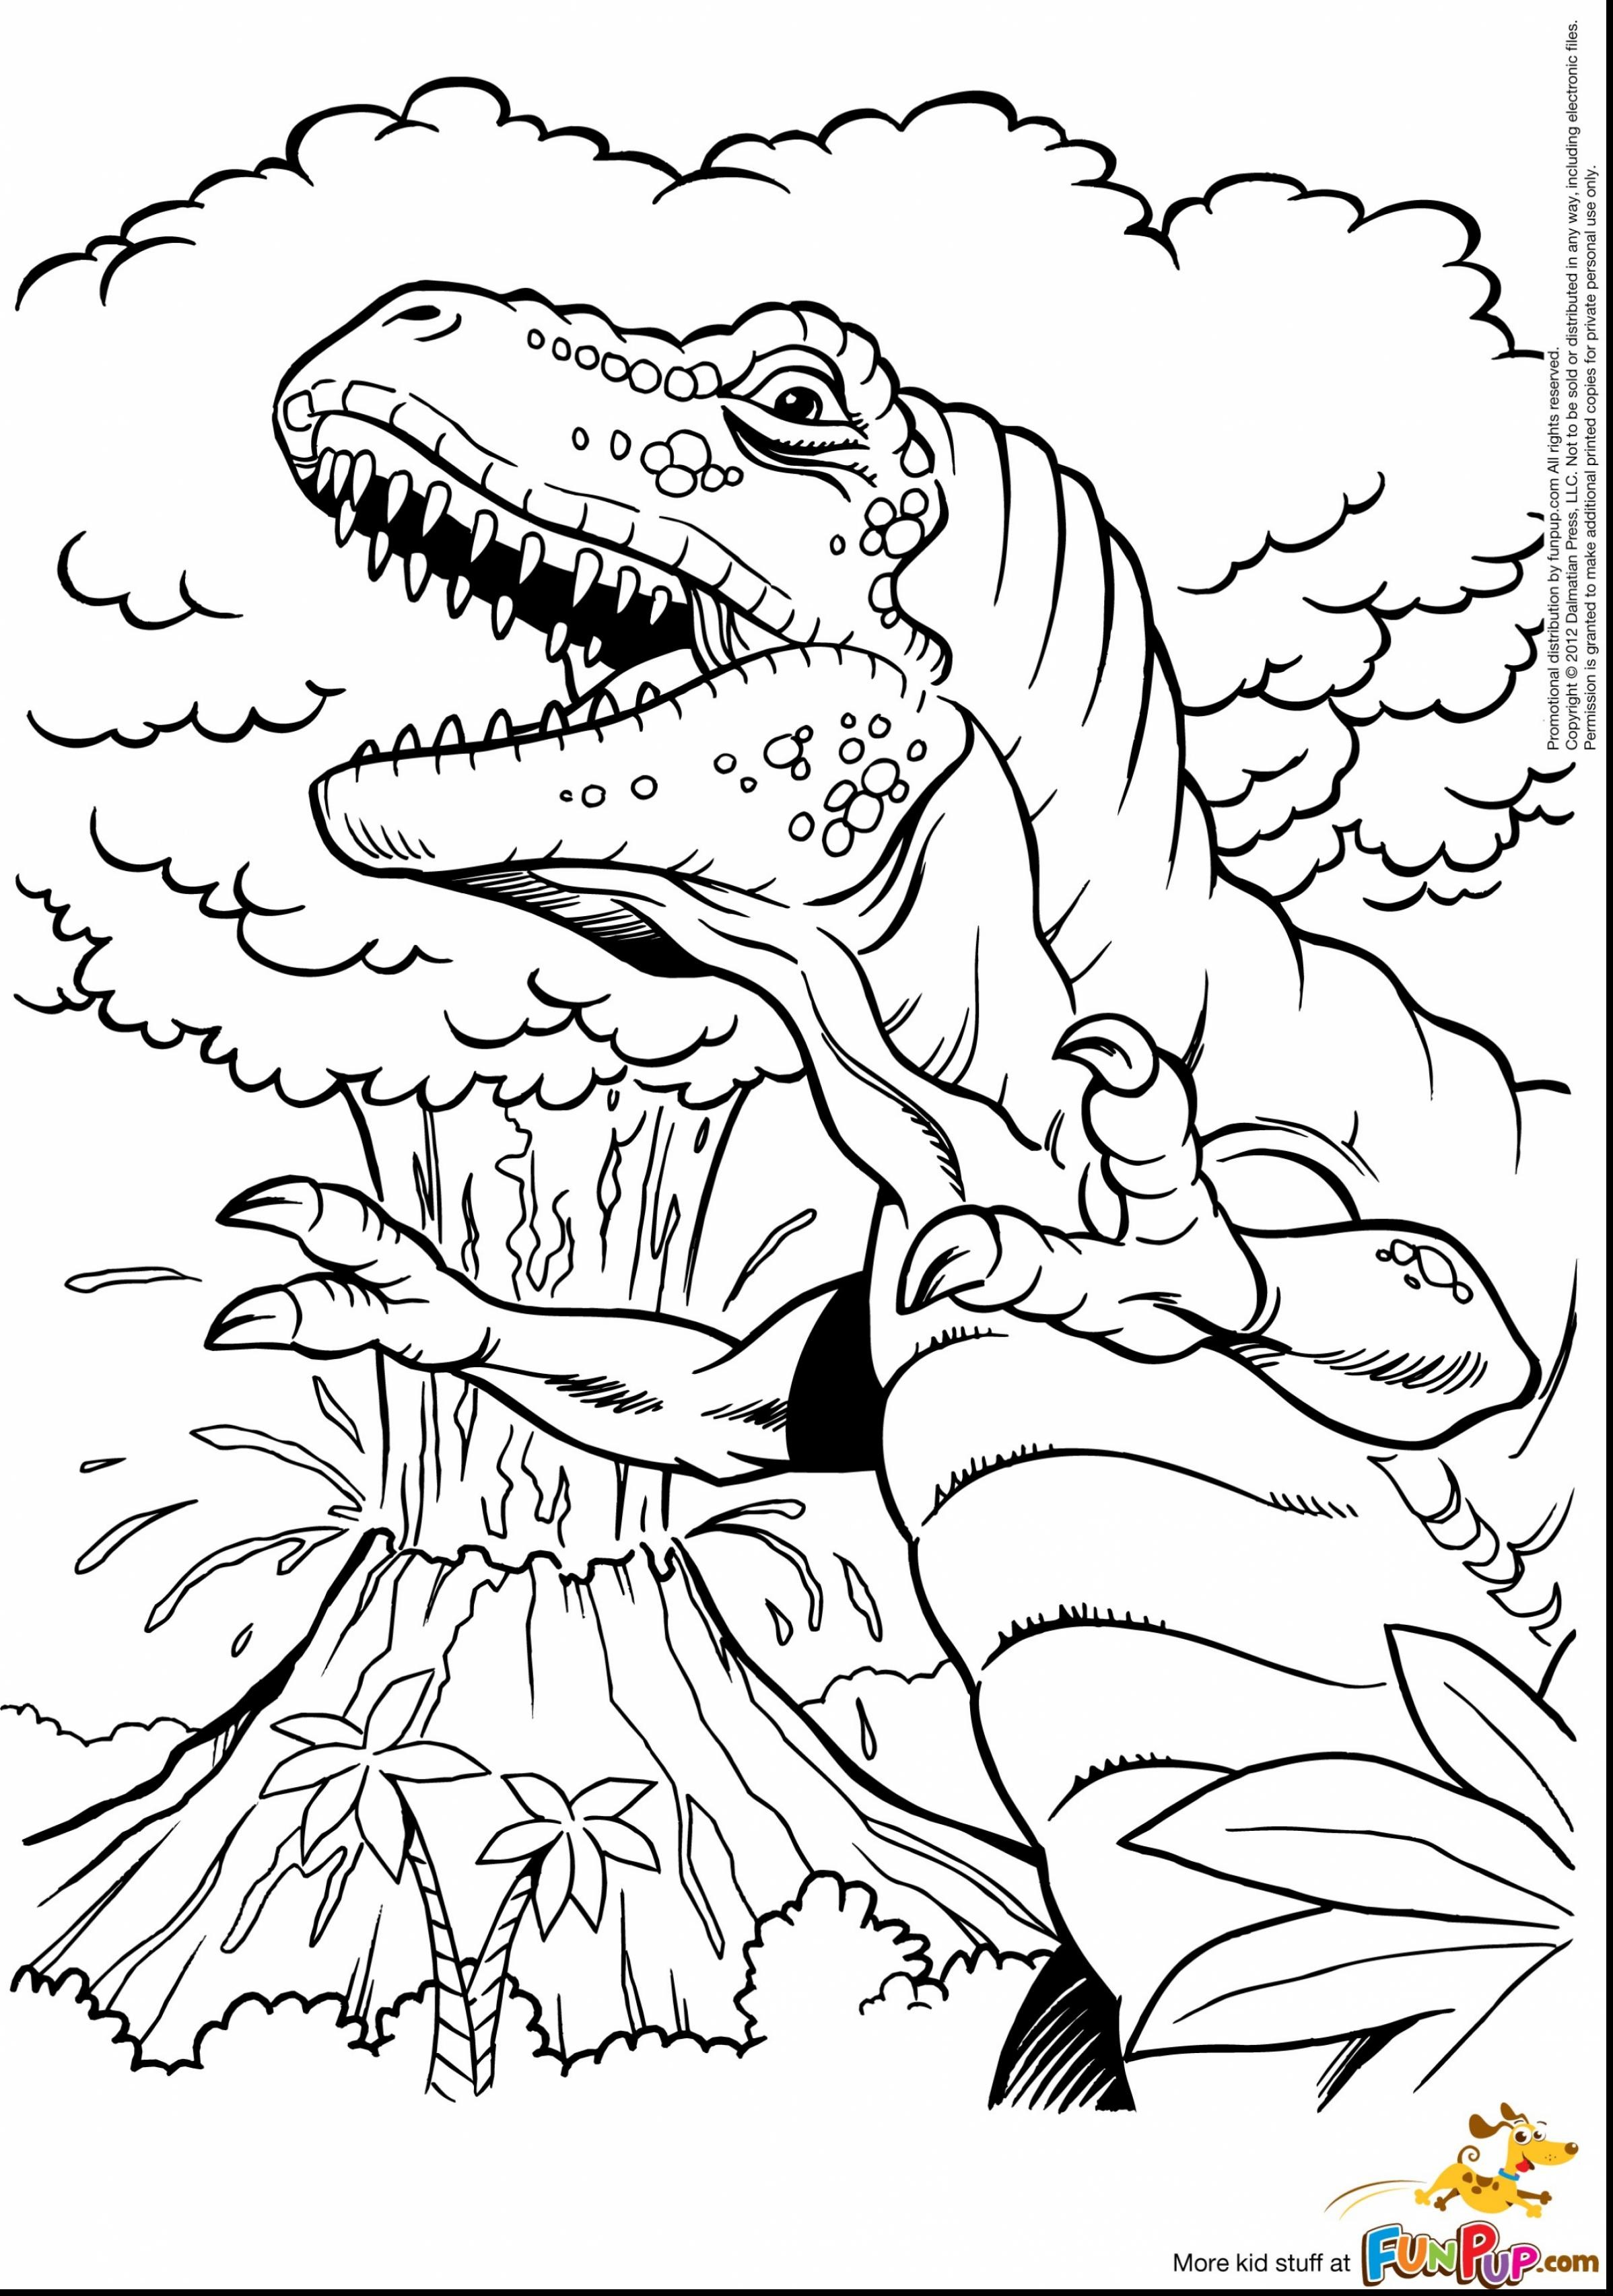 Tyrannosaurus Rex Drawing at GetDrawings | Free download